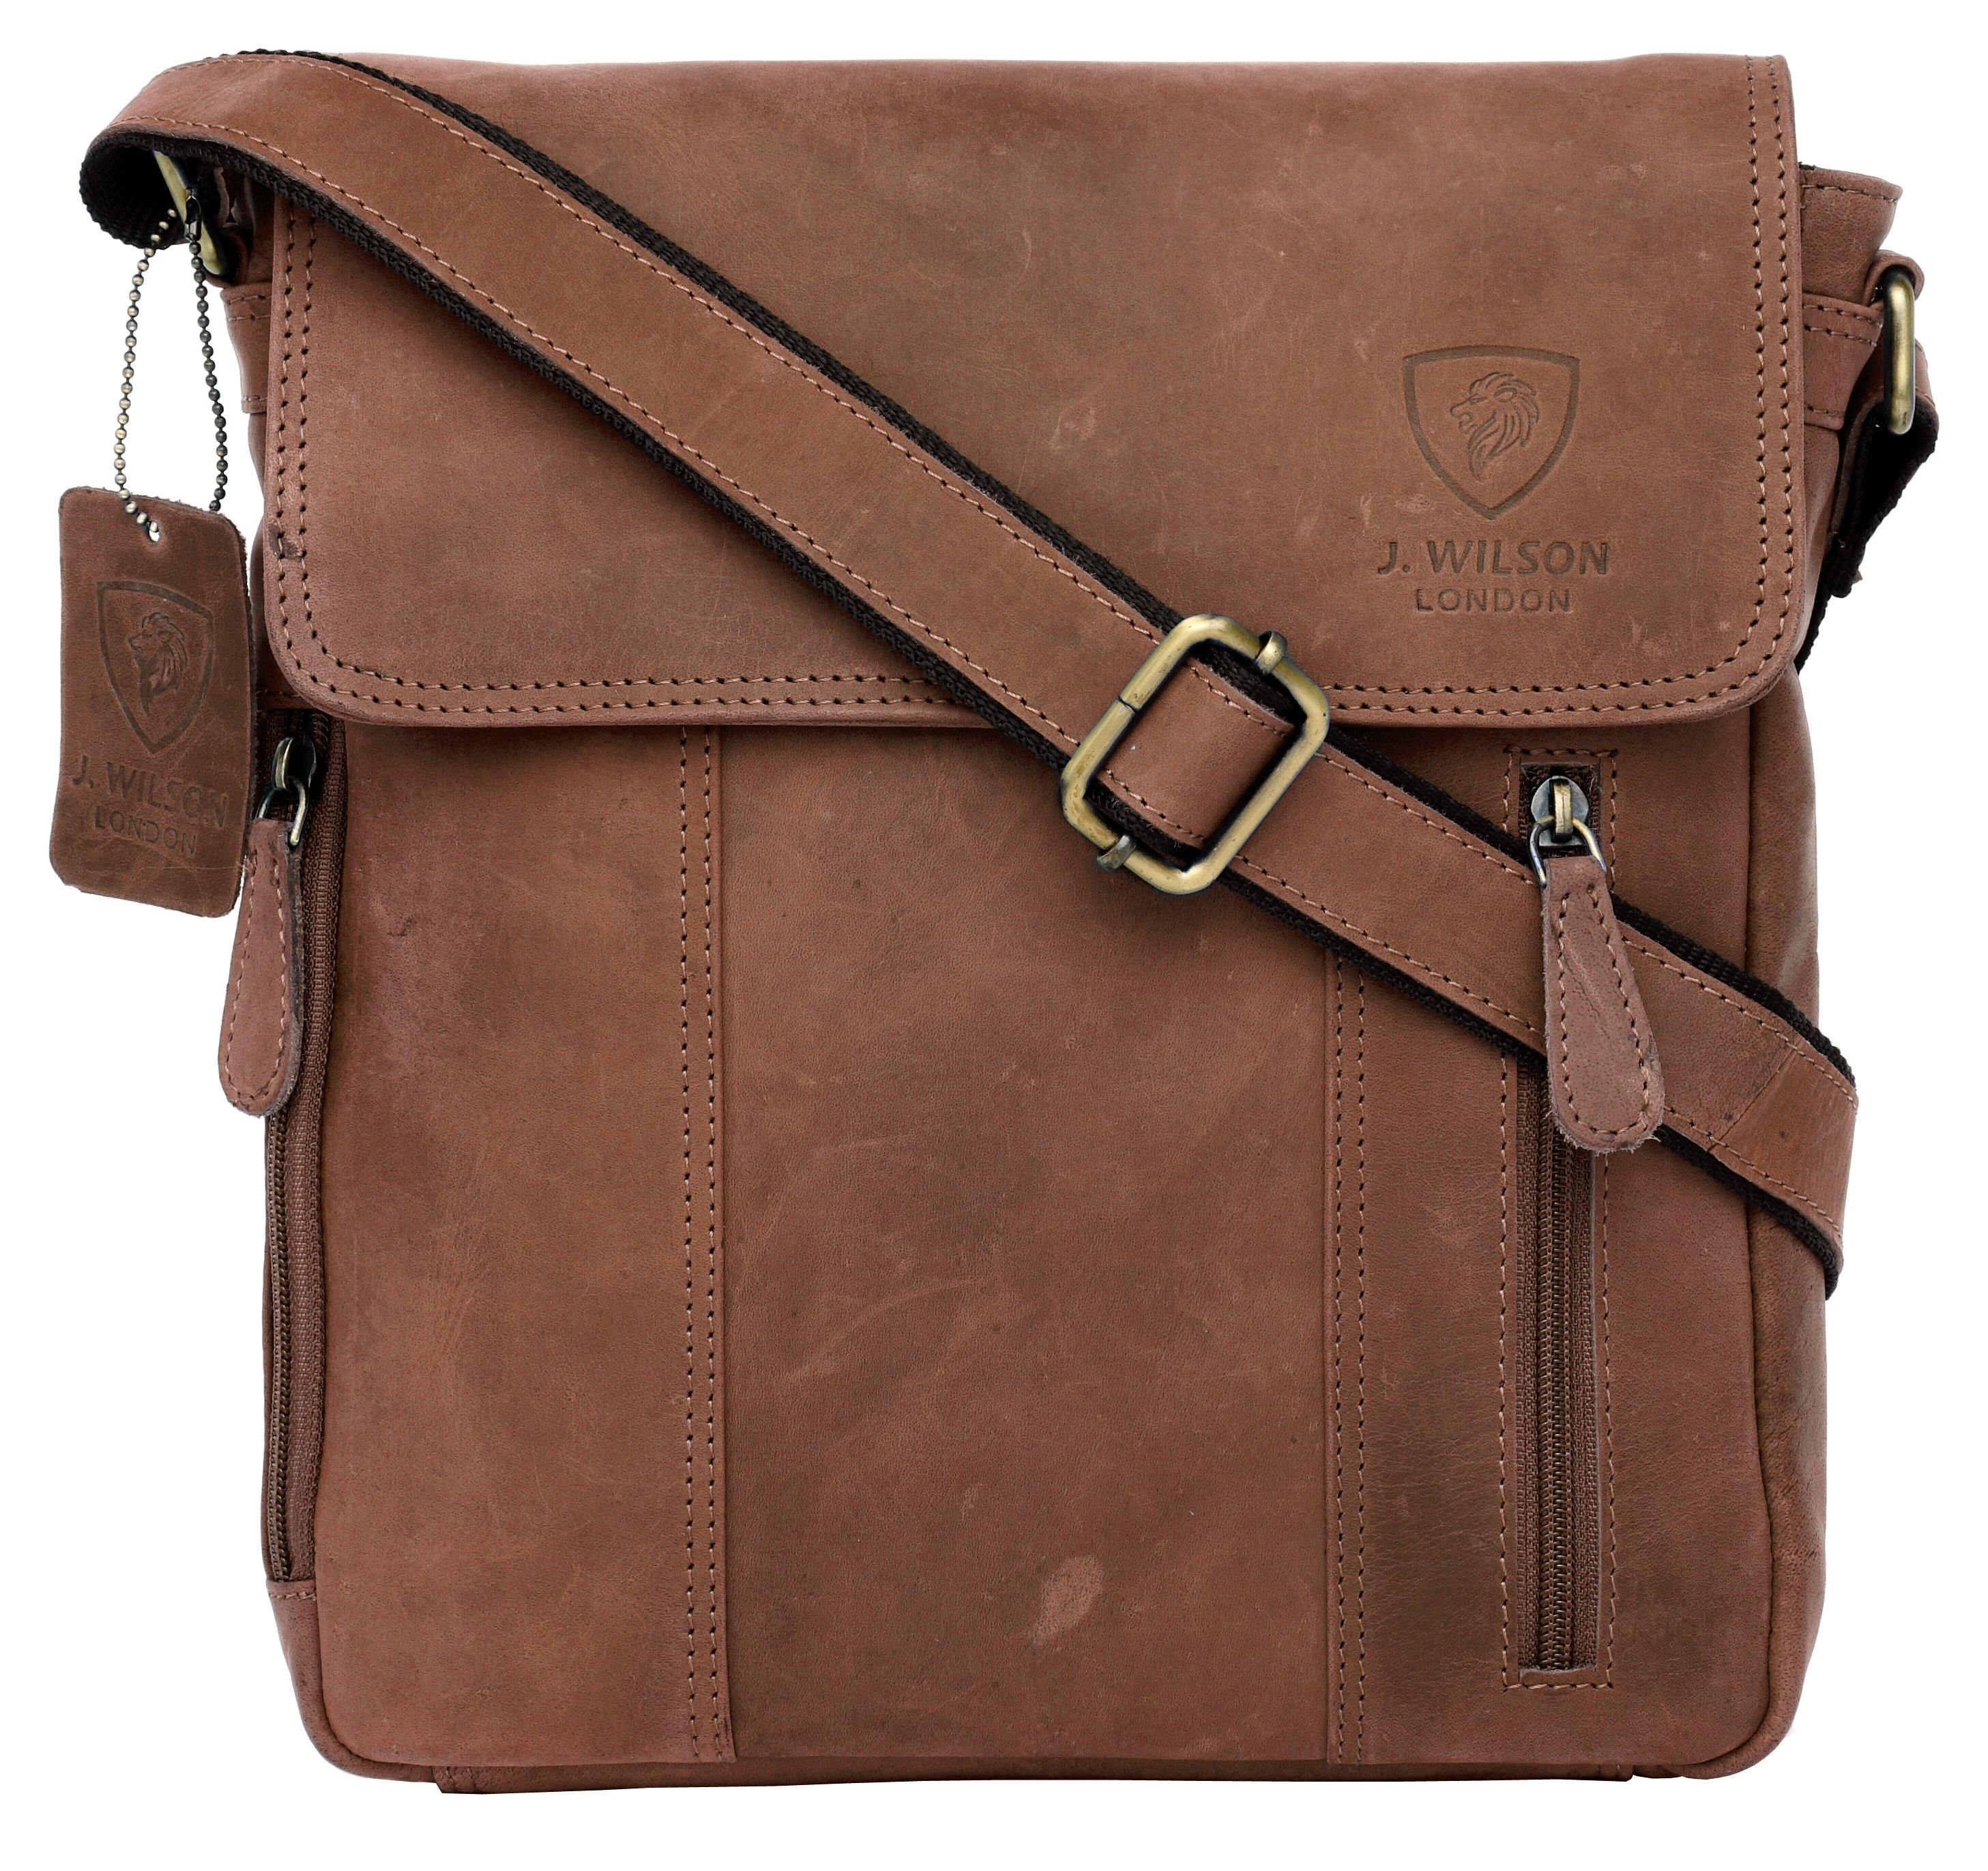 Designer Genuine Real Nappa Leather 15 Laptop Handmade Unisex Crossover Everyday Crossover Work iPad Shoulder Messenger Briefcase Bag J WILSON London Brown